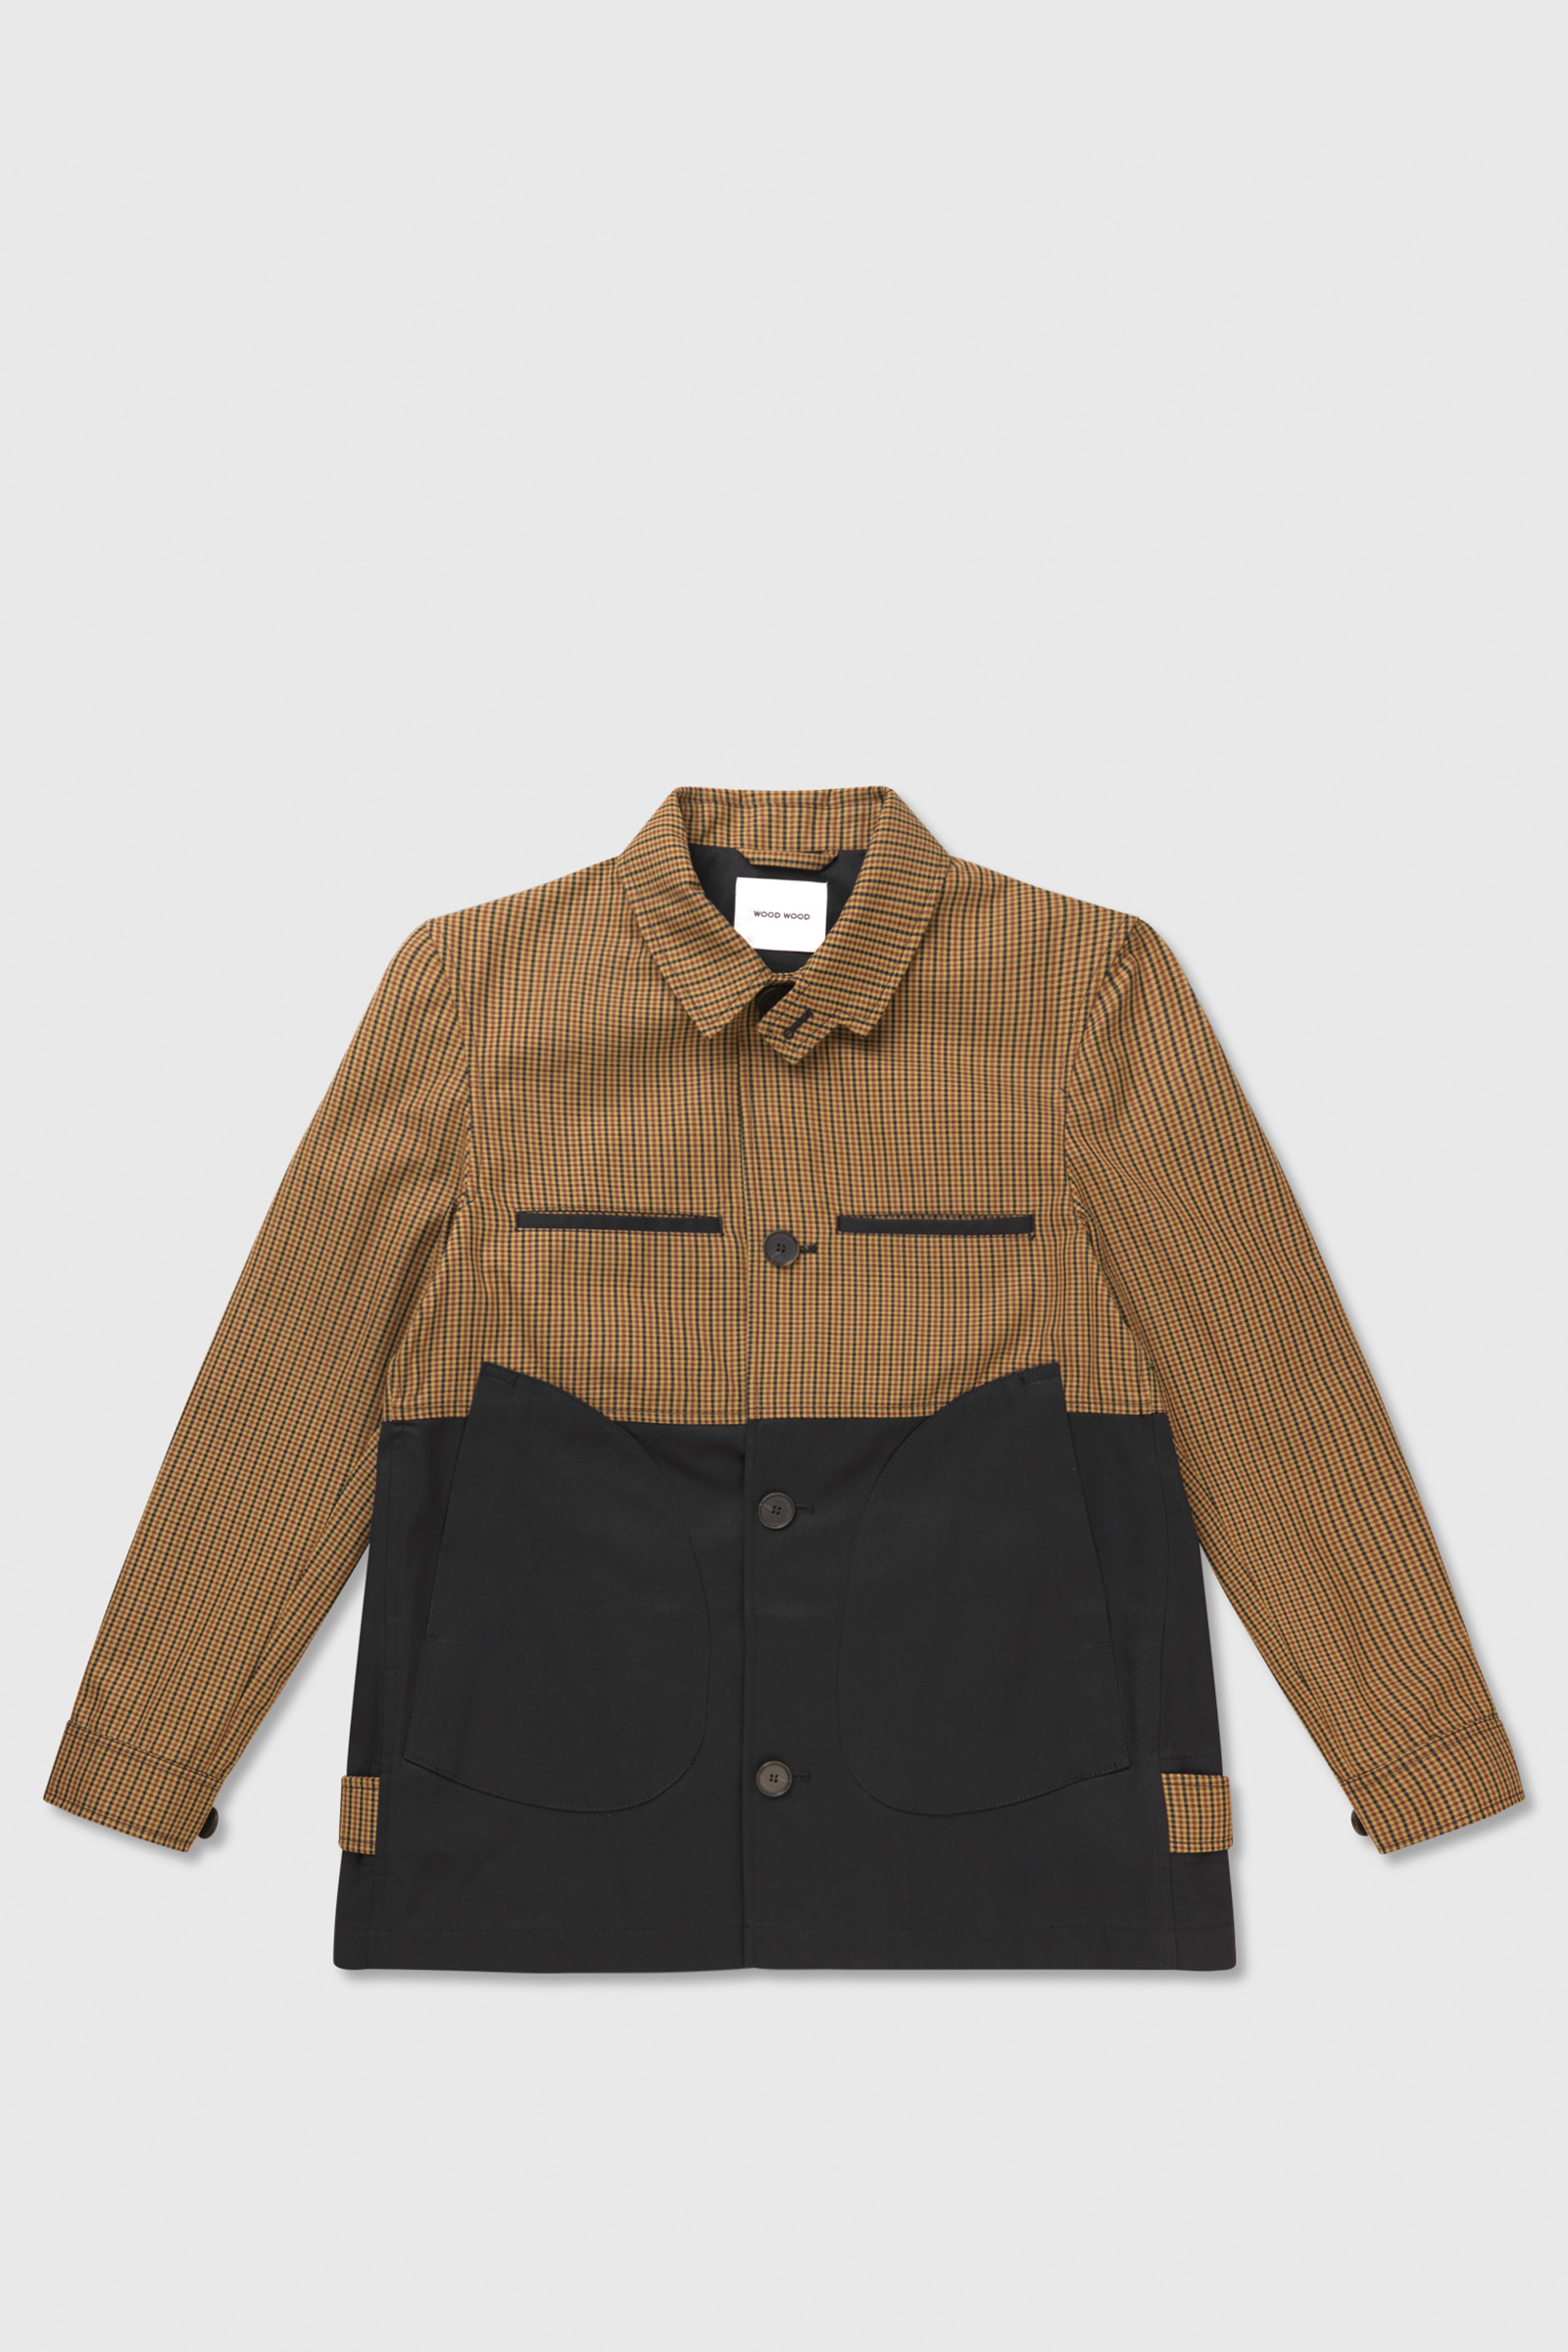 Coats, Jackets - See selection on WoodWood.com